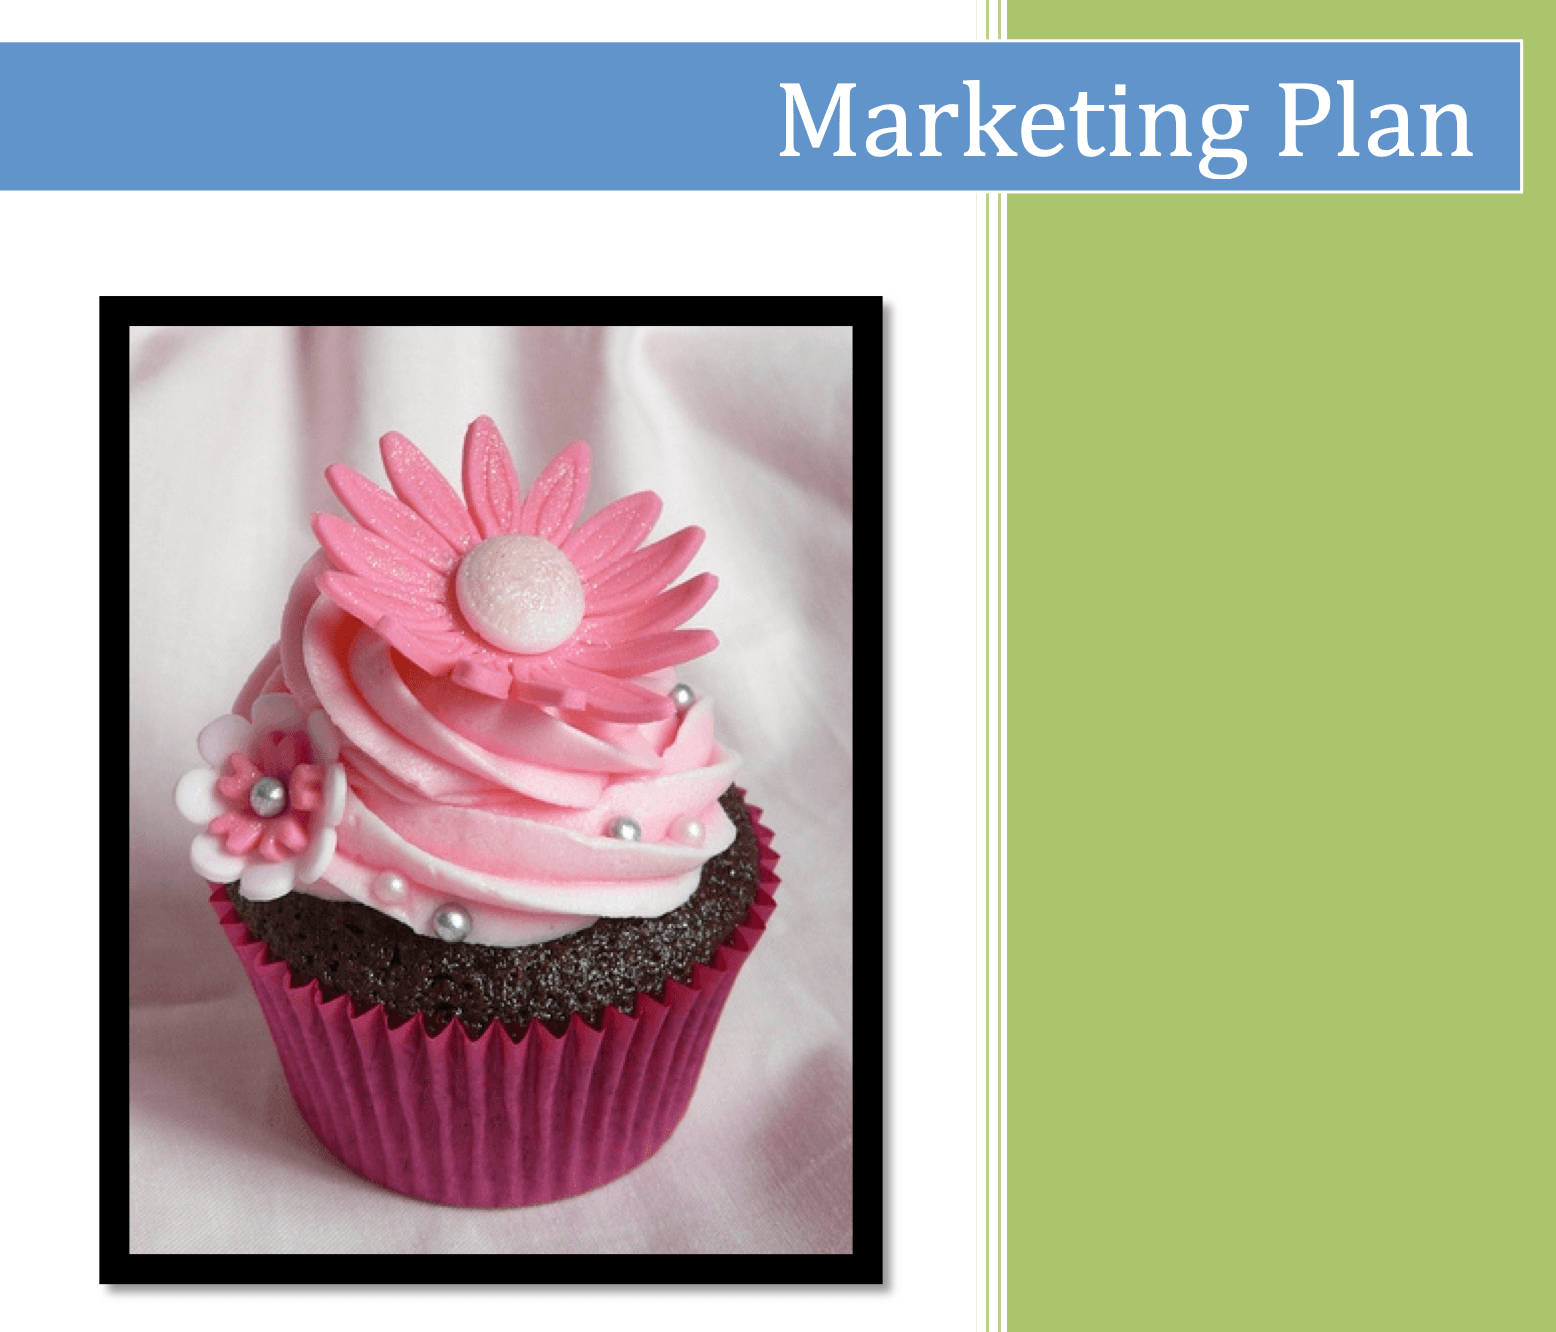 Presentation slide titled Marketing Plan with a designed cupcake